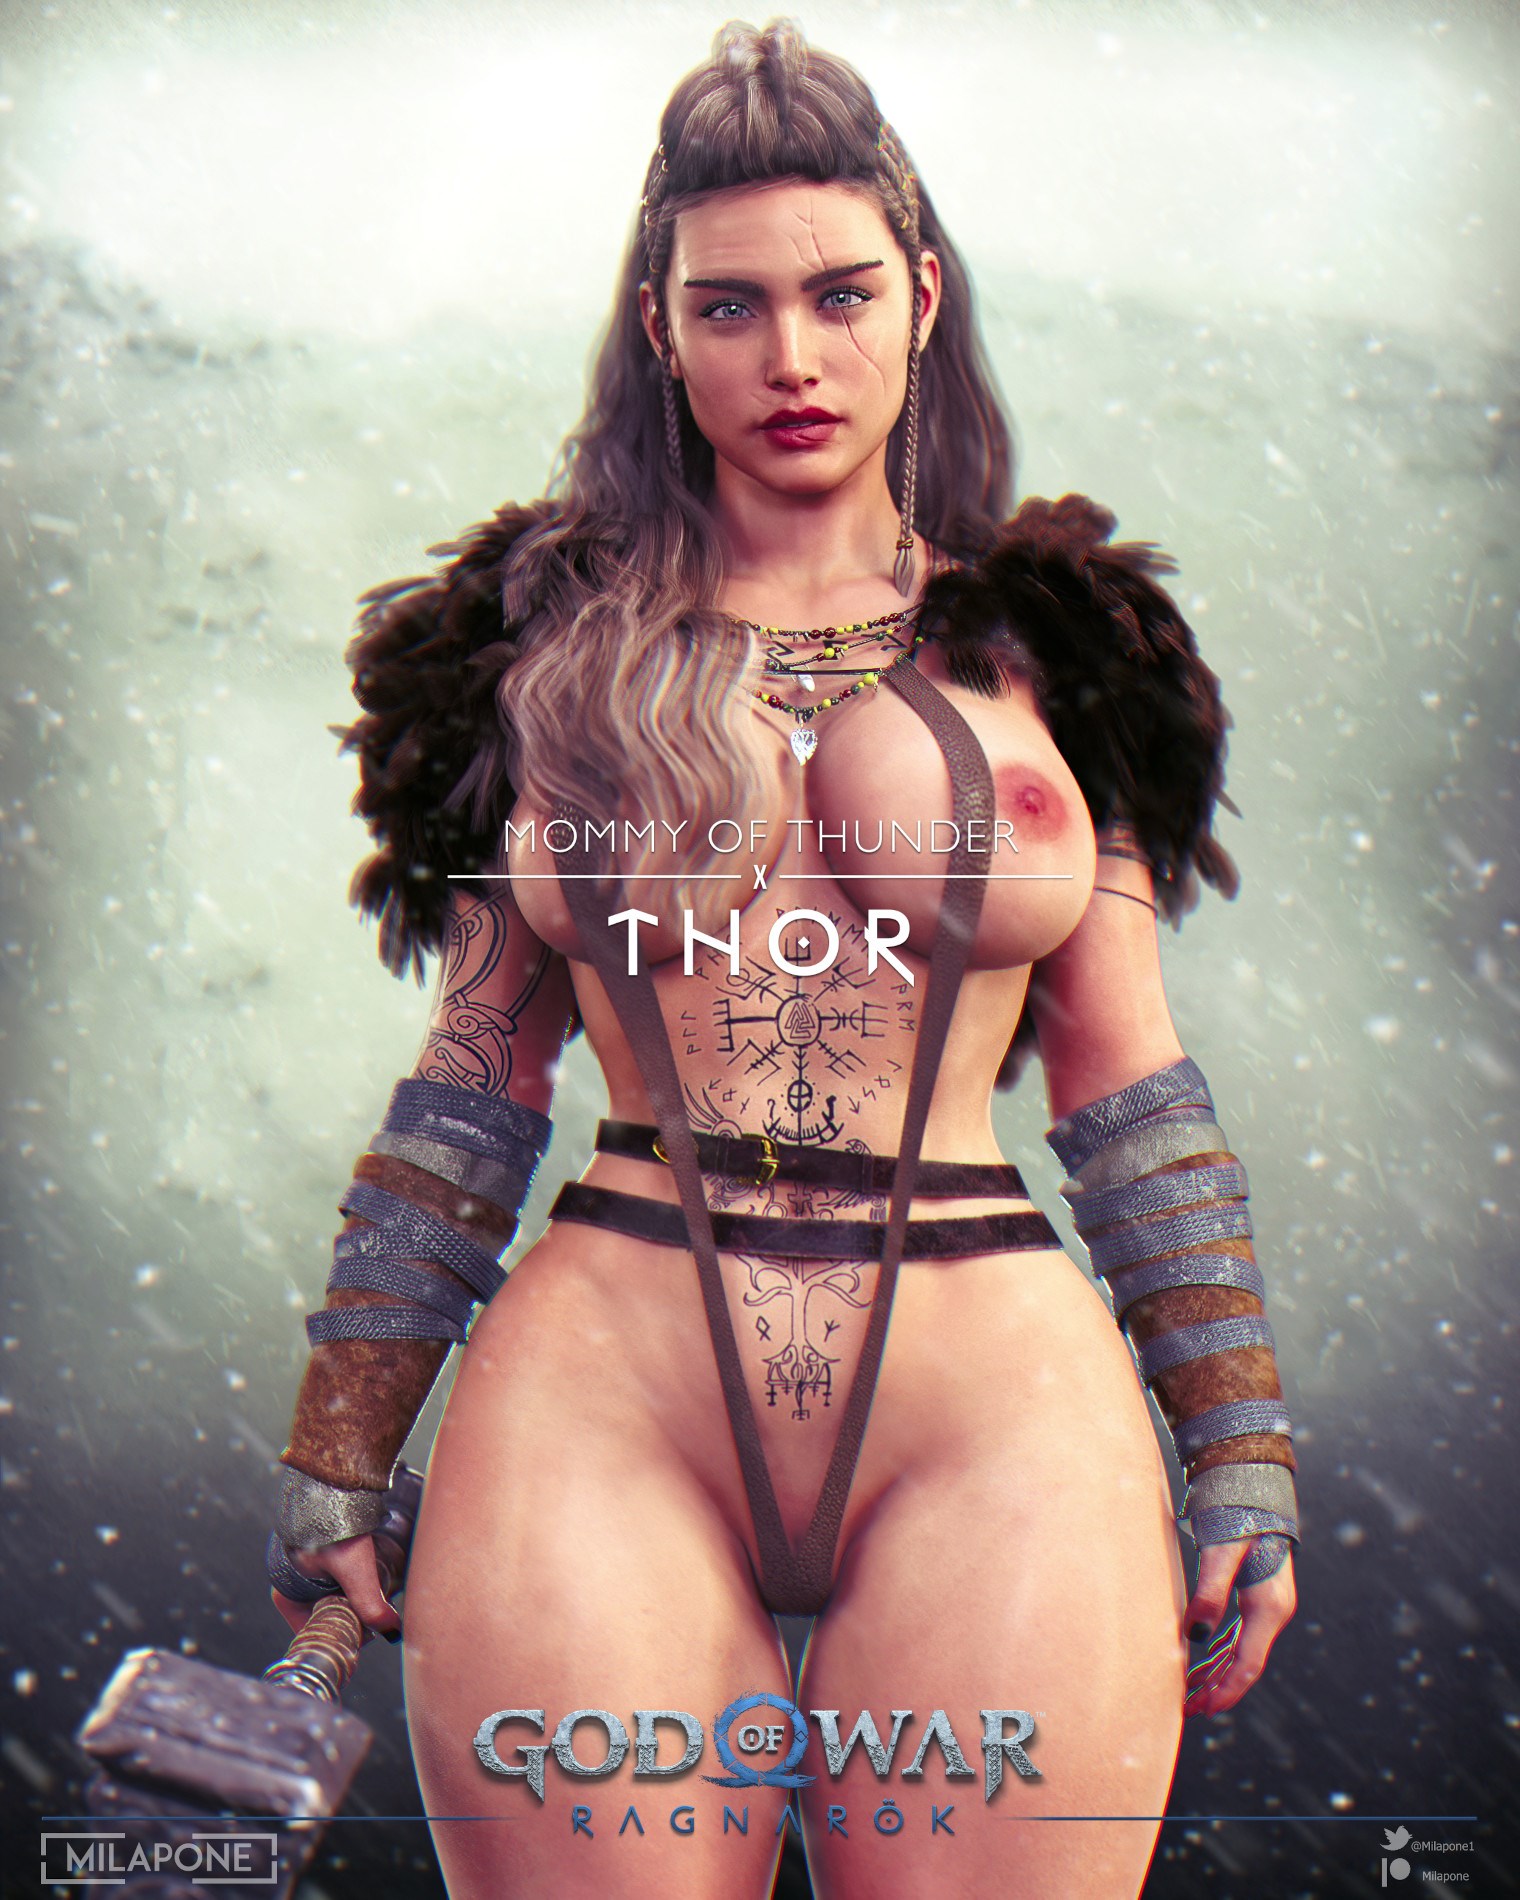 FemThor - Mommy of Thunder (Milapone) [God of War] Adult Pics Hq